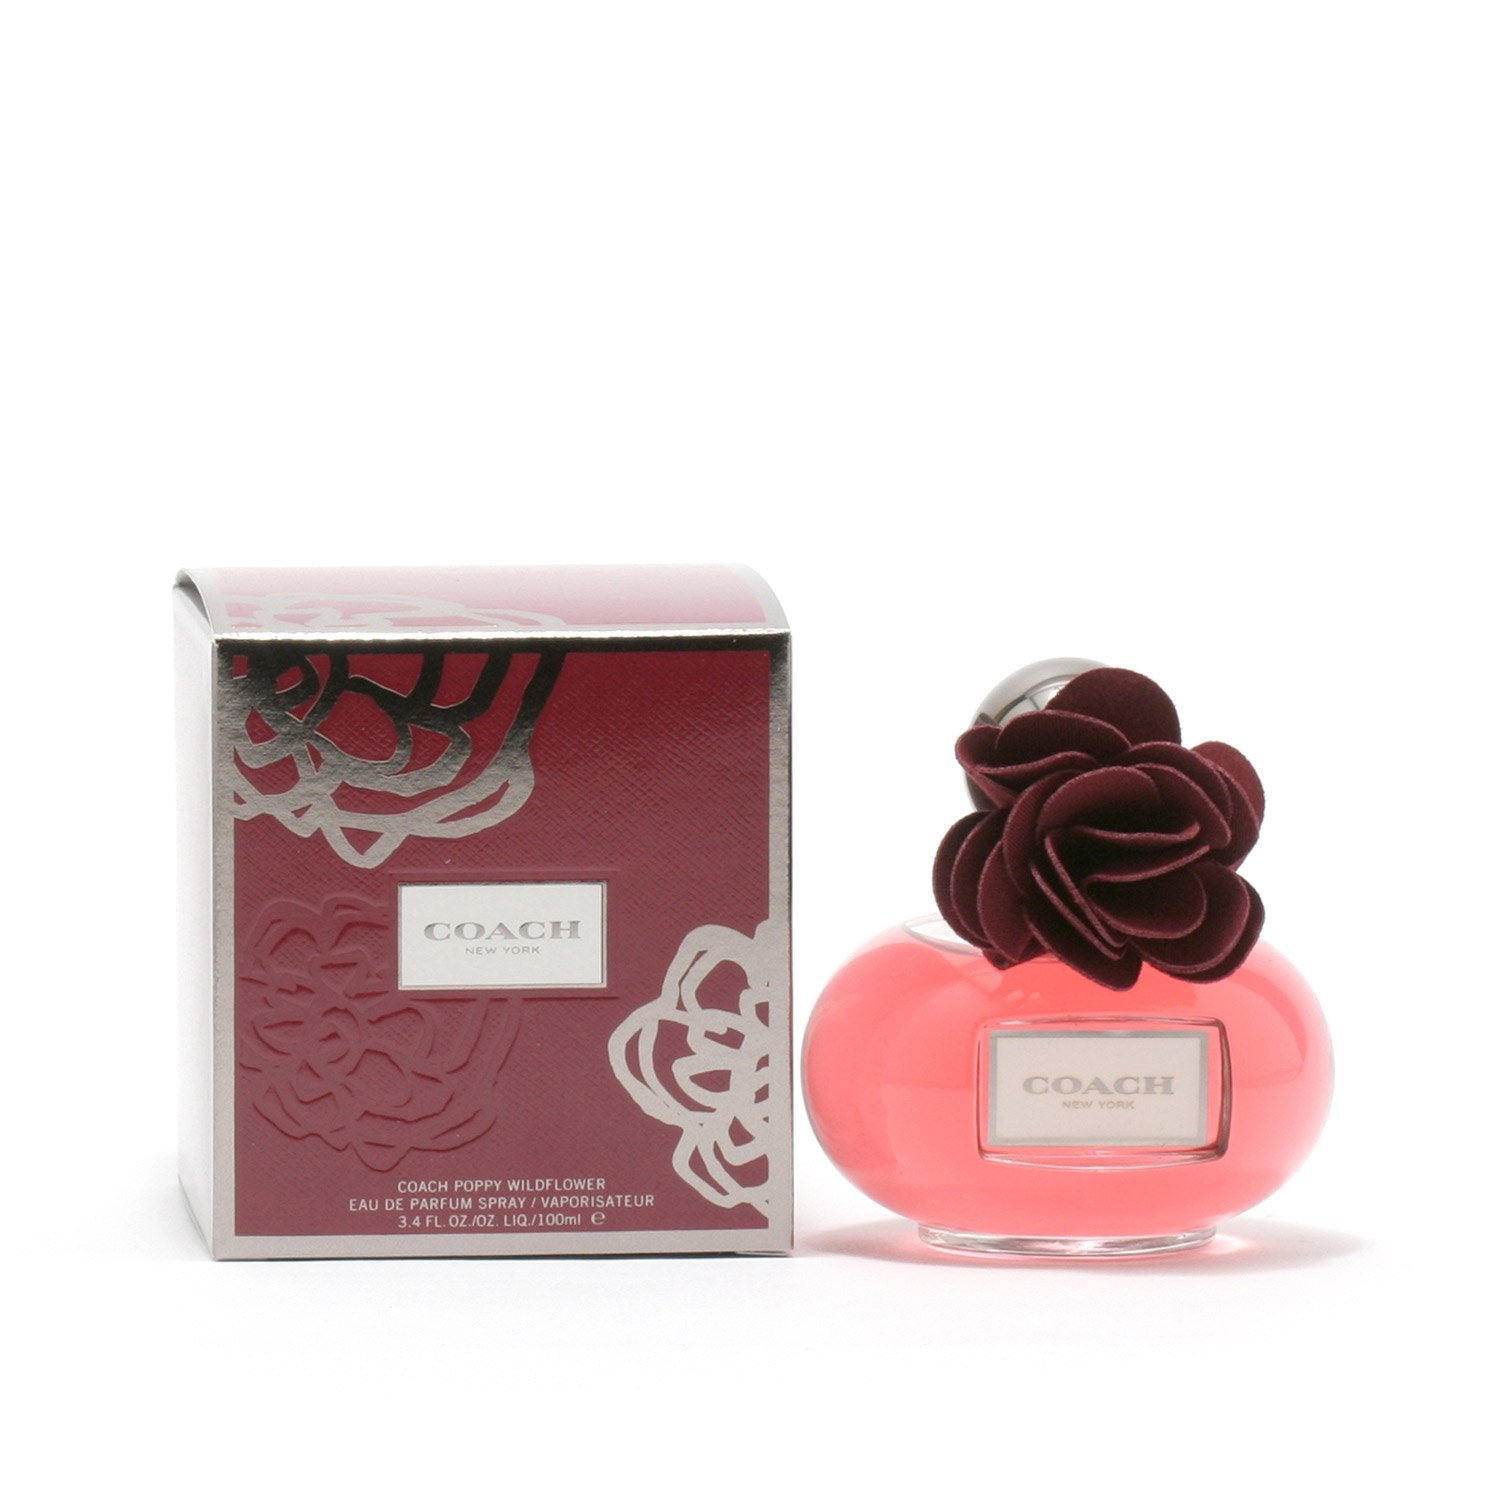 Perfume - COACH WILDFLOWER FOR WOMEN - EAU DE PARFUM SPRAY